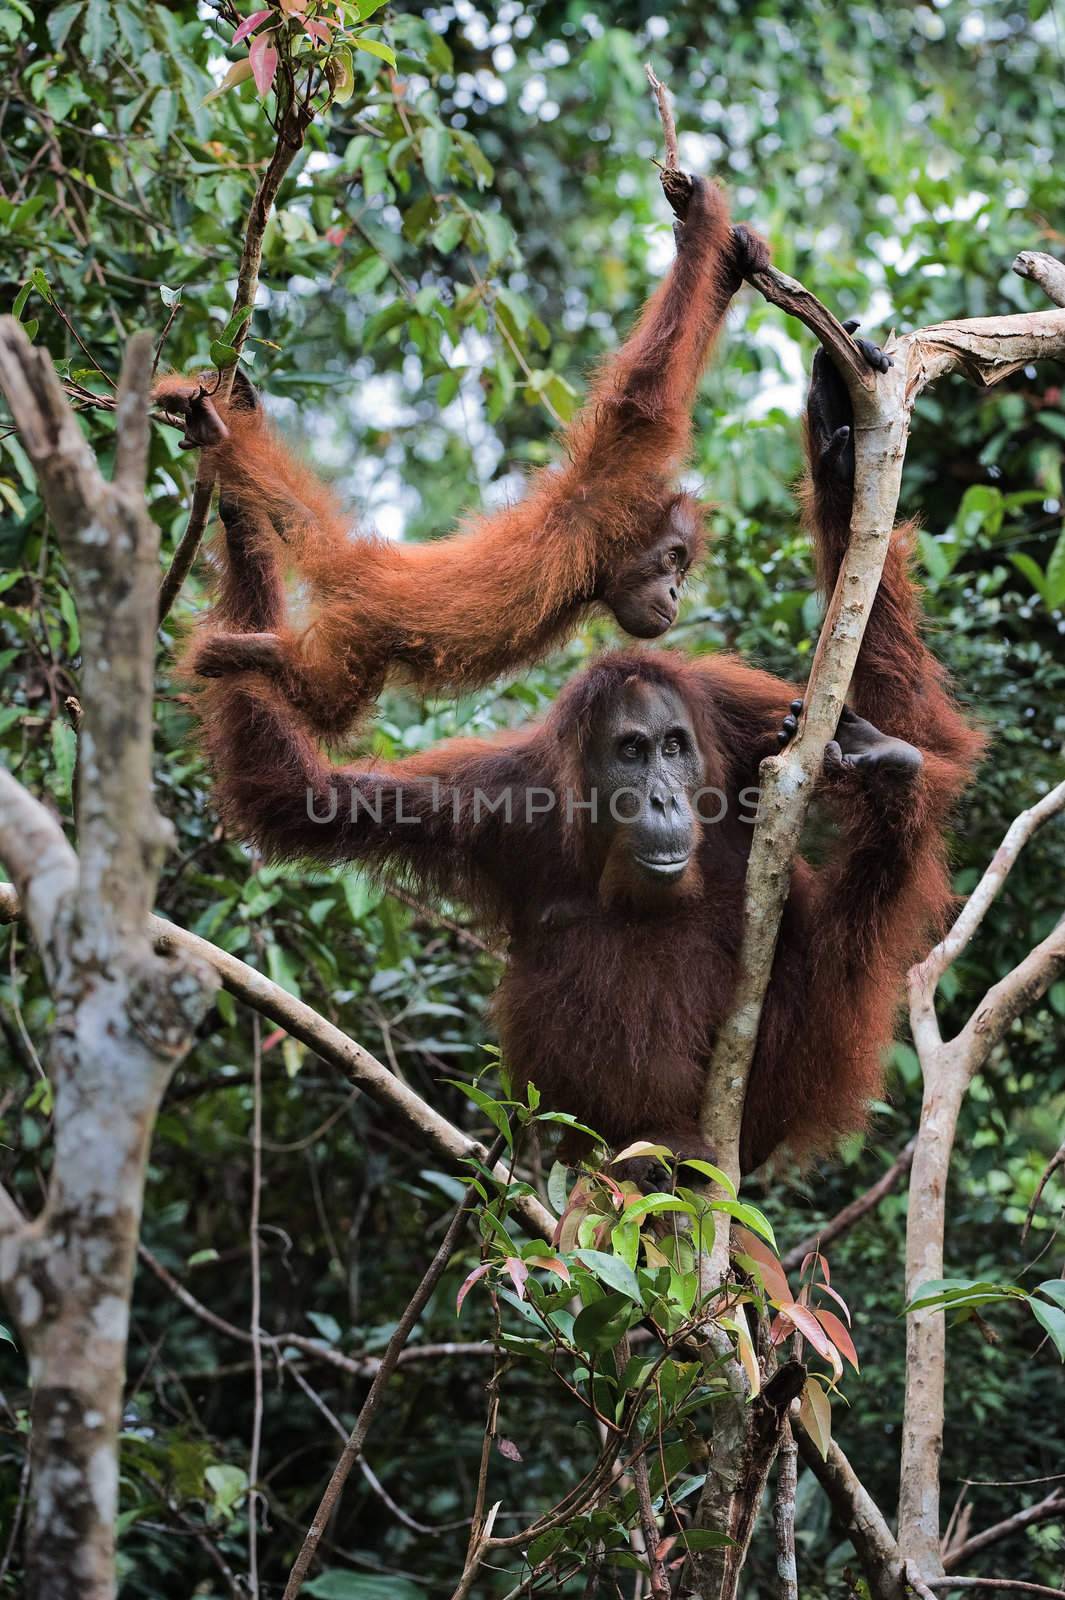 Female the orangutan with a cub in branches of trees./ Inonesia. Borneo.